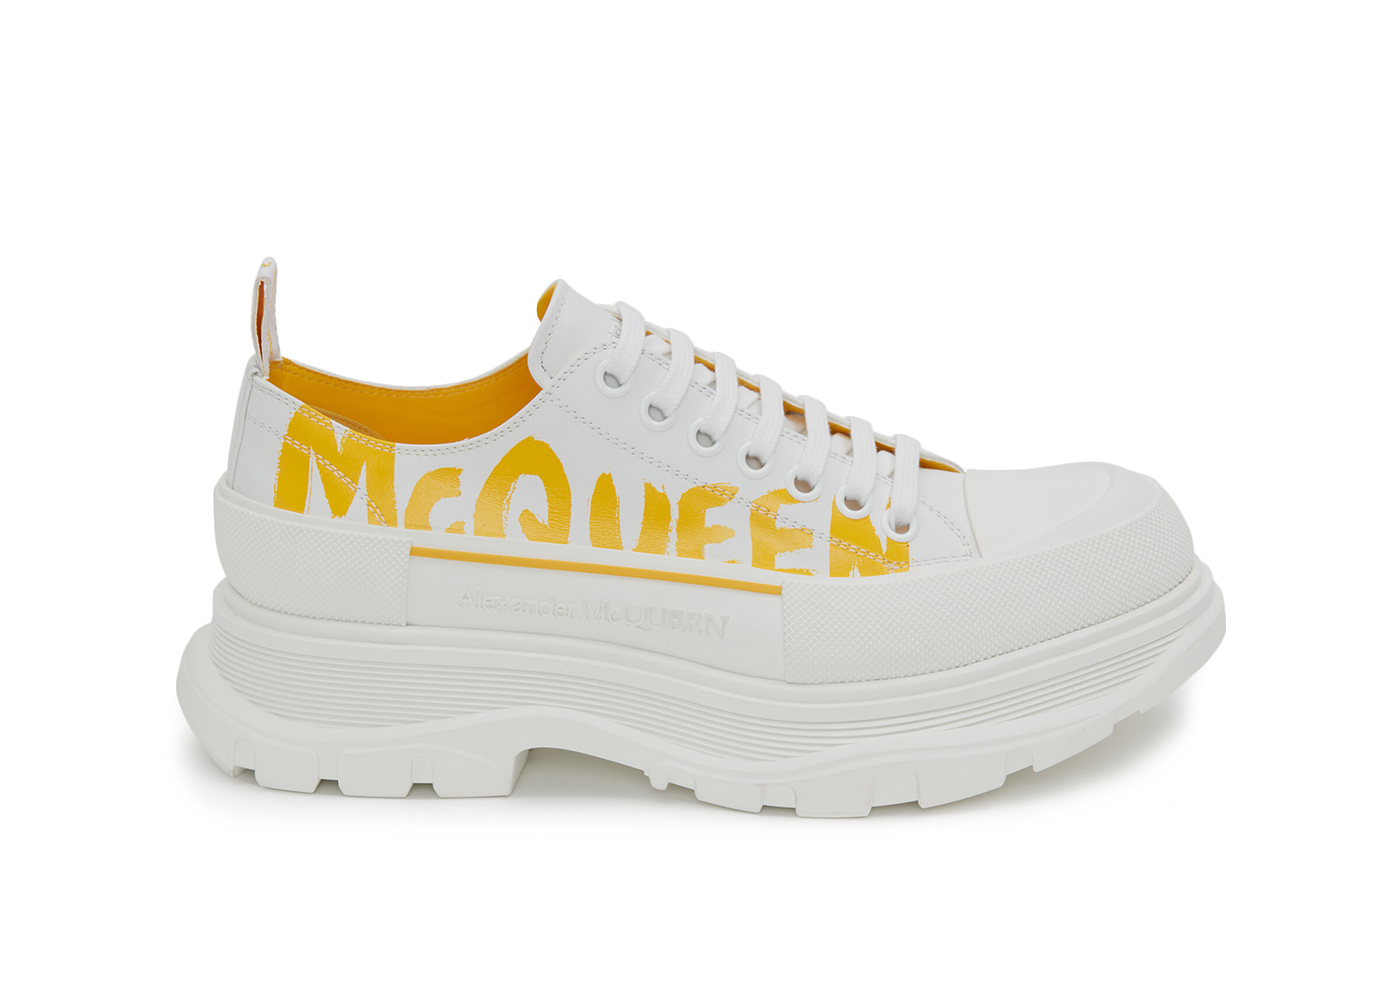 Alexander McQueen Tread Slick Low Lace Up Graffiti White Yellow ...